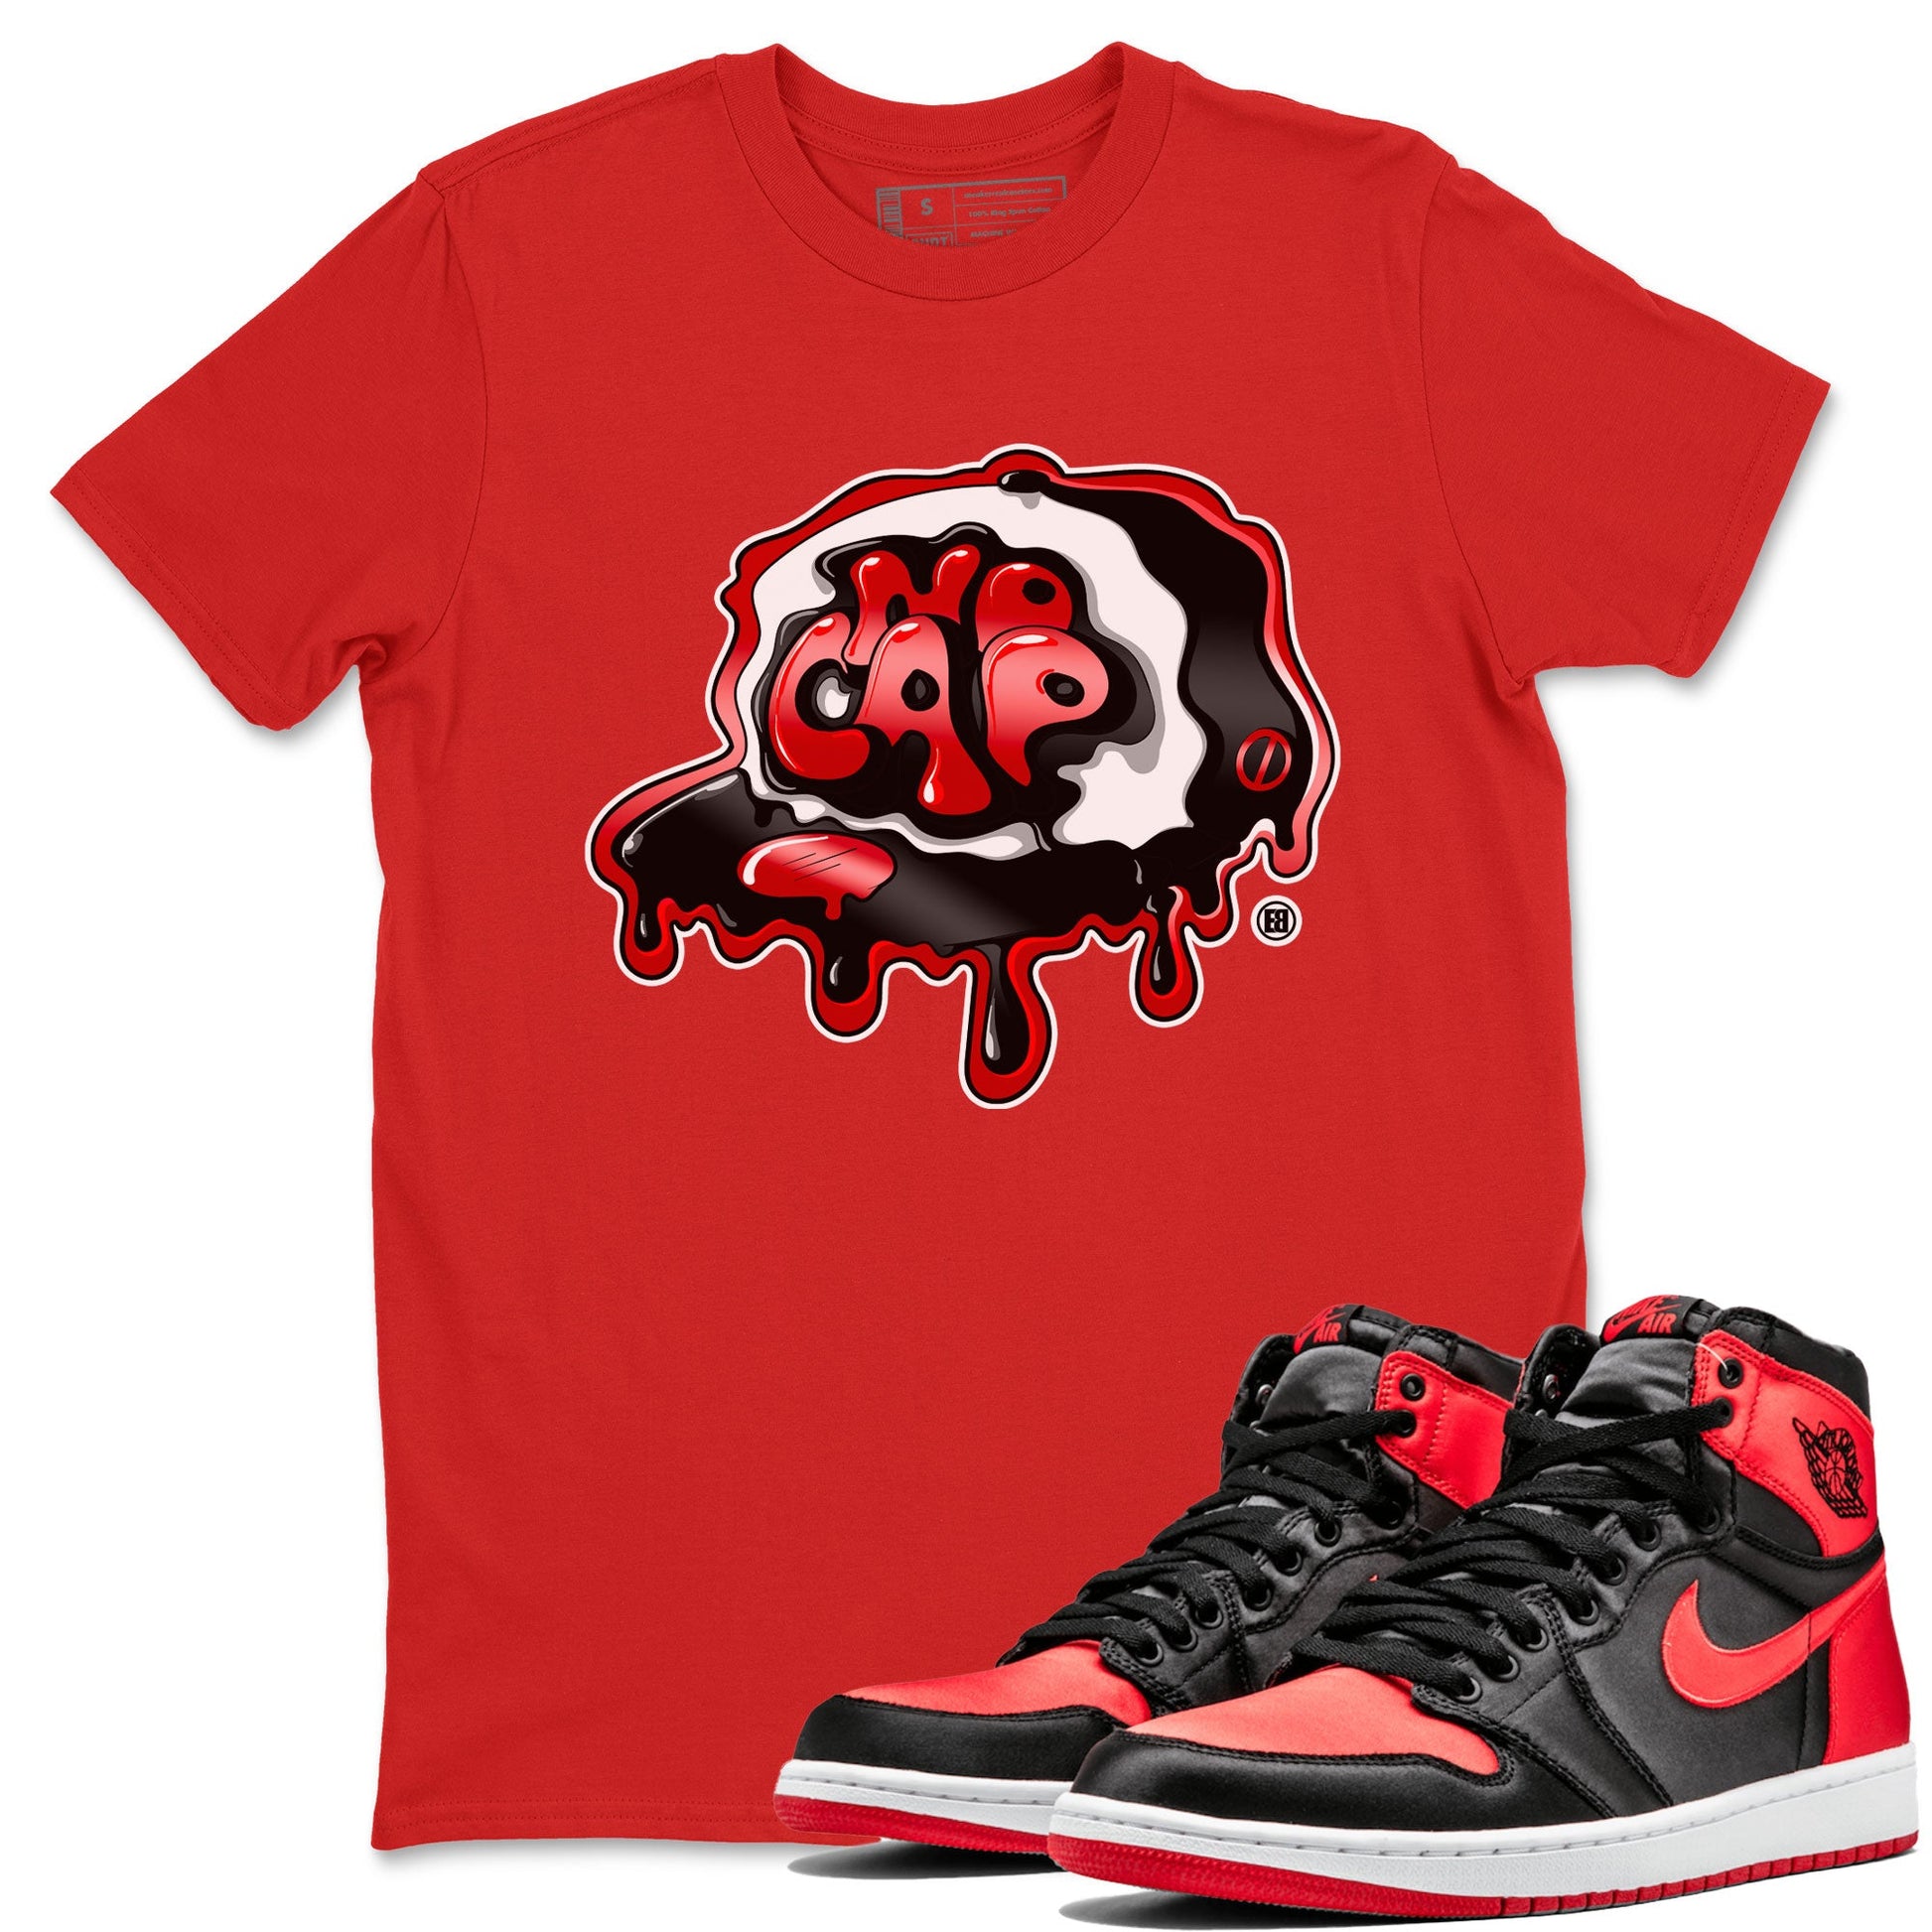 Air Jordan 1 Retro High OG Satin Bred shirt to match jordans No Cap sneaker tees Air Jordan 1 Satin Bred SNRT Sneaker Release Tees Casual Unisex shirts Red 1 T-Shirt